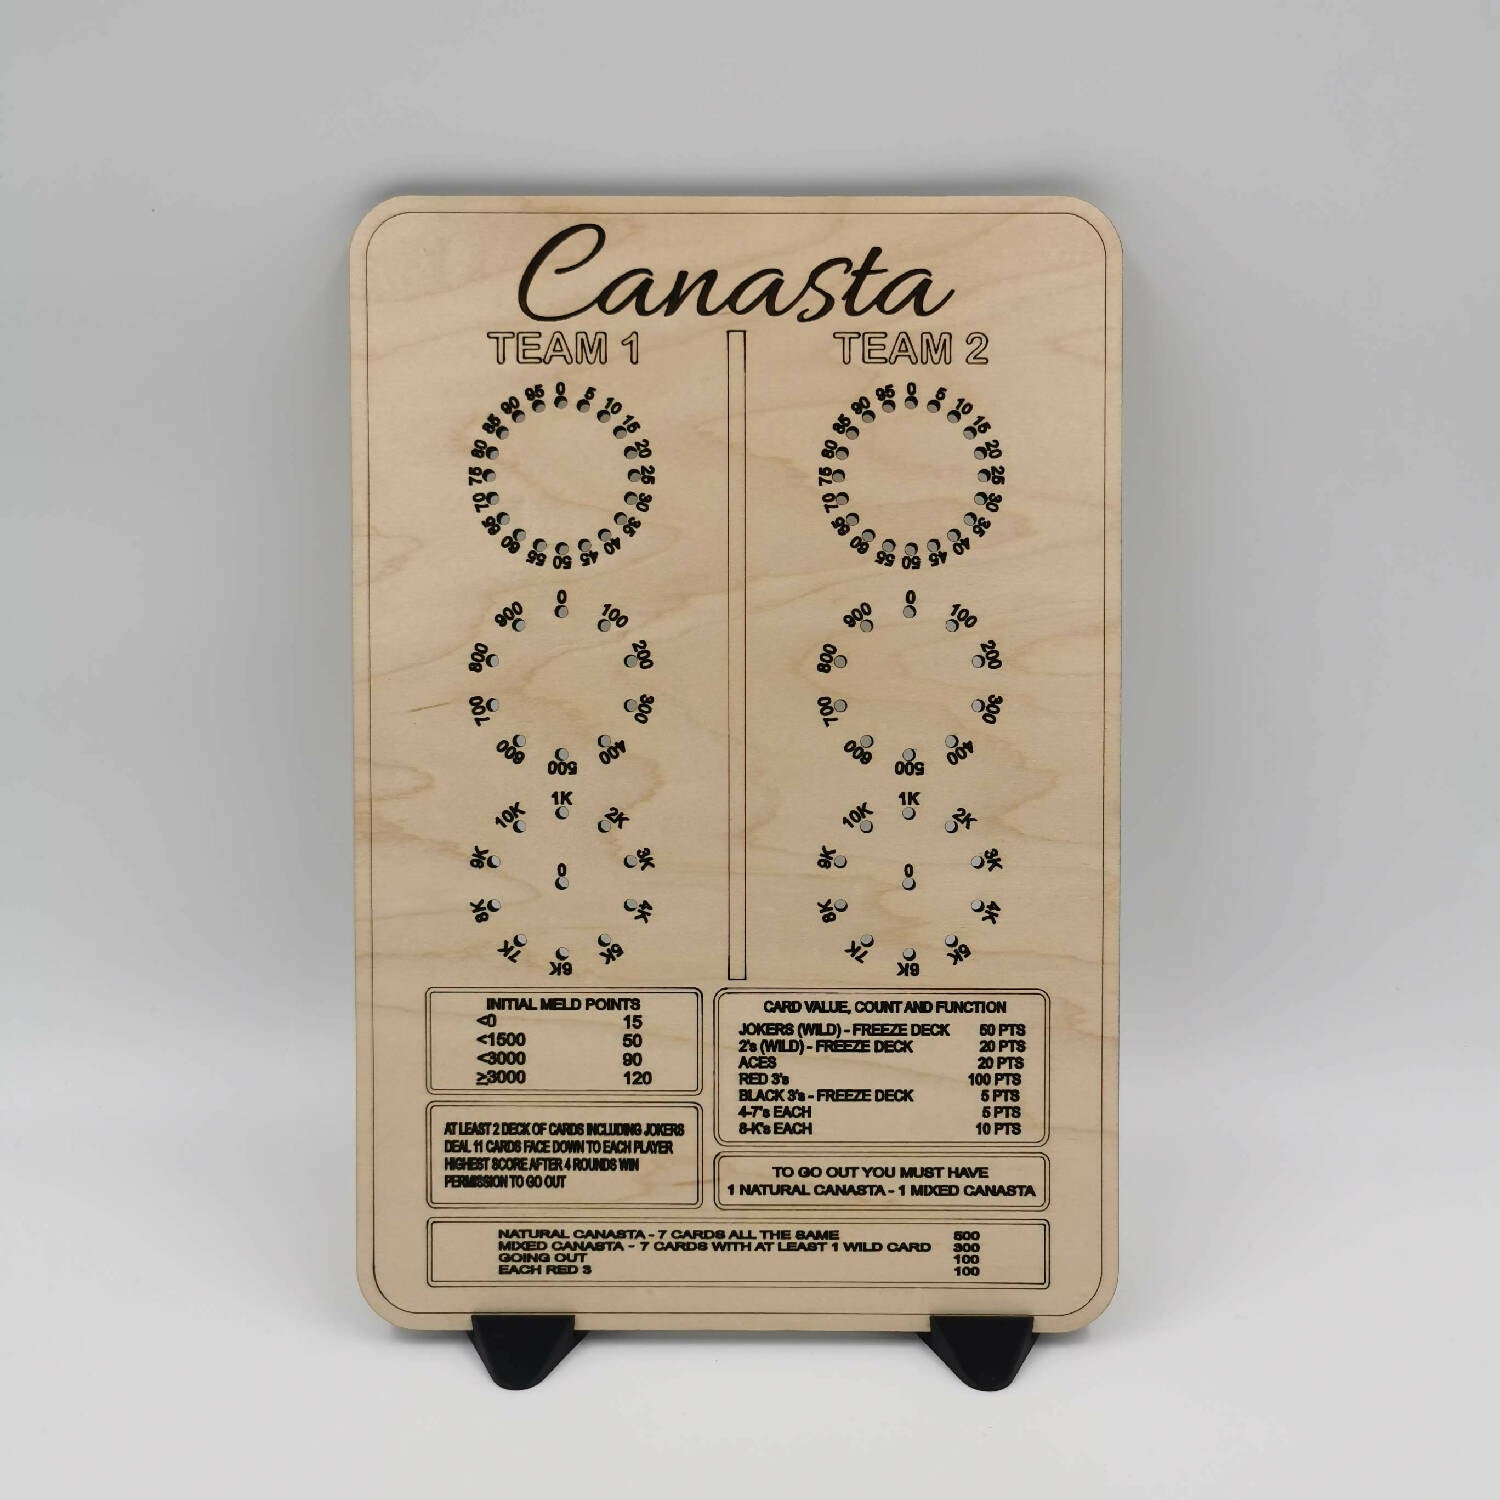 Canasta board